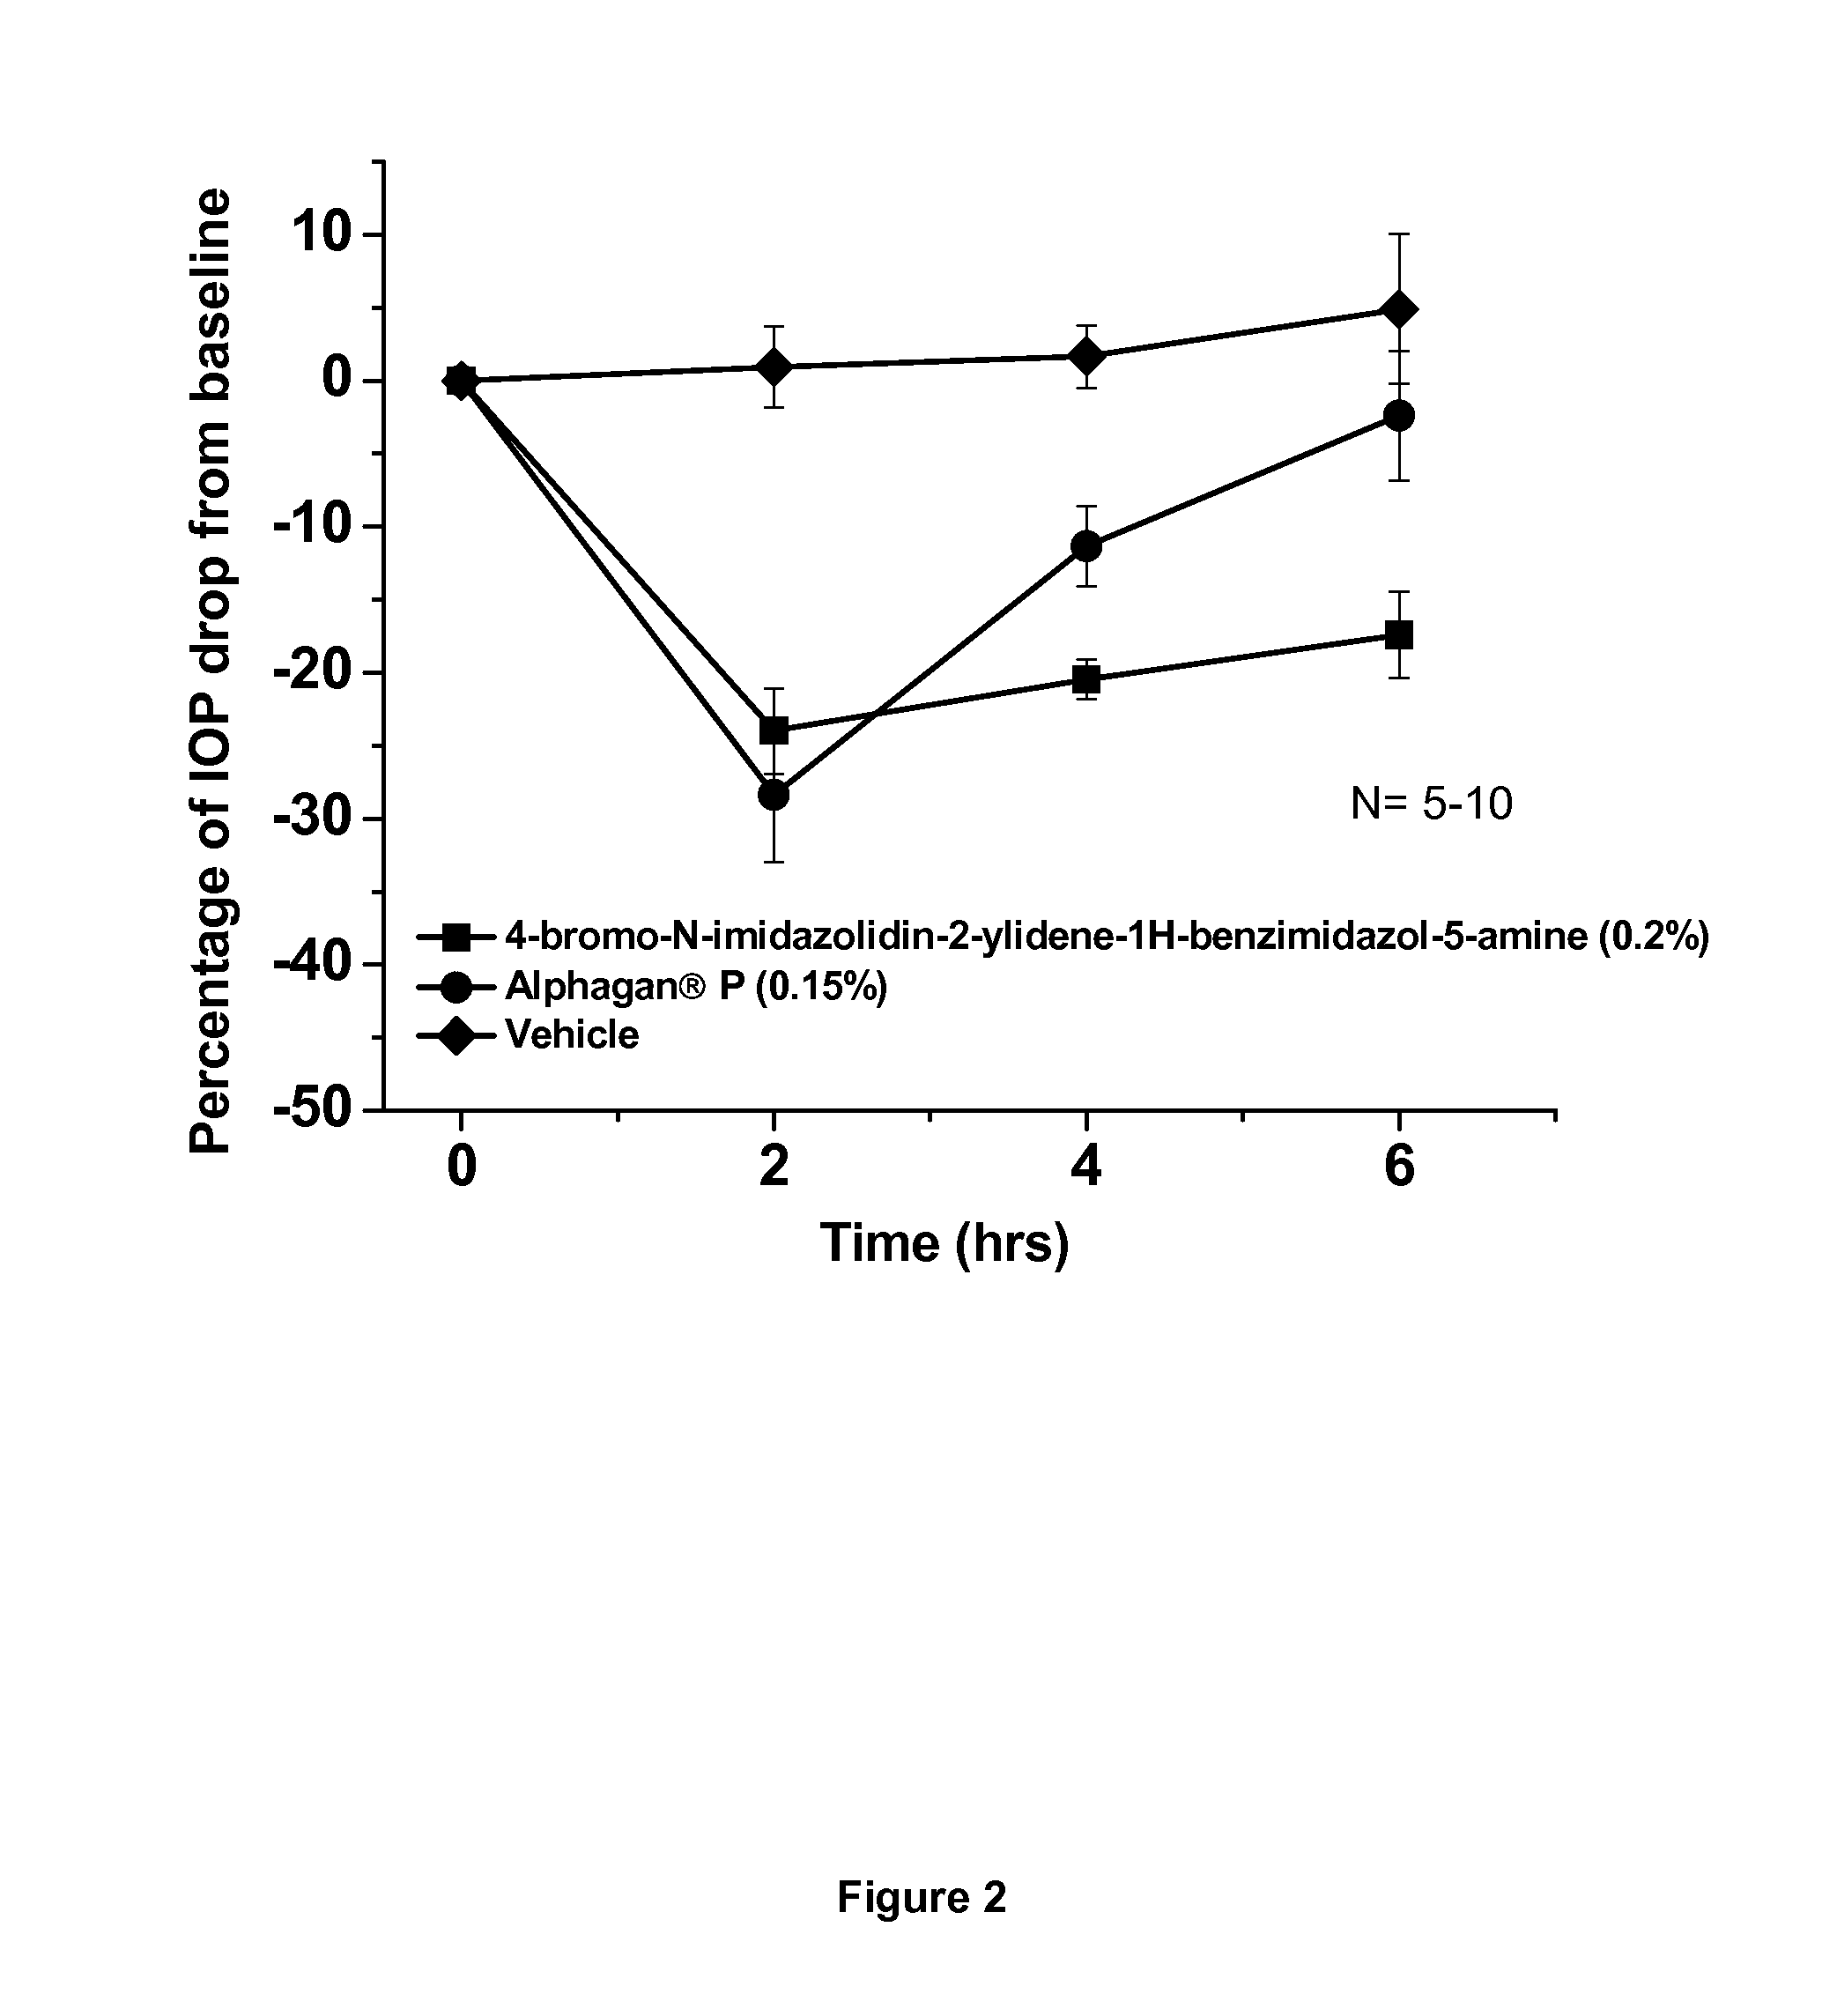 Alpha-2 adrenergic agonist having long duration ofintraocular pressure-lowering effect